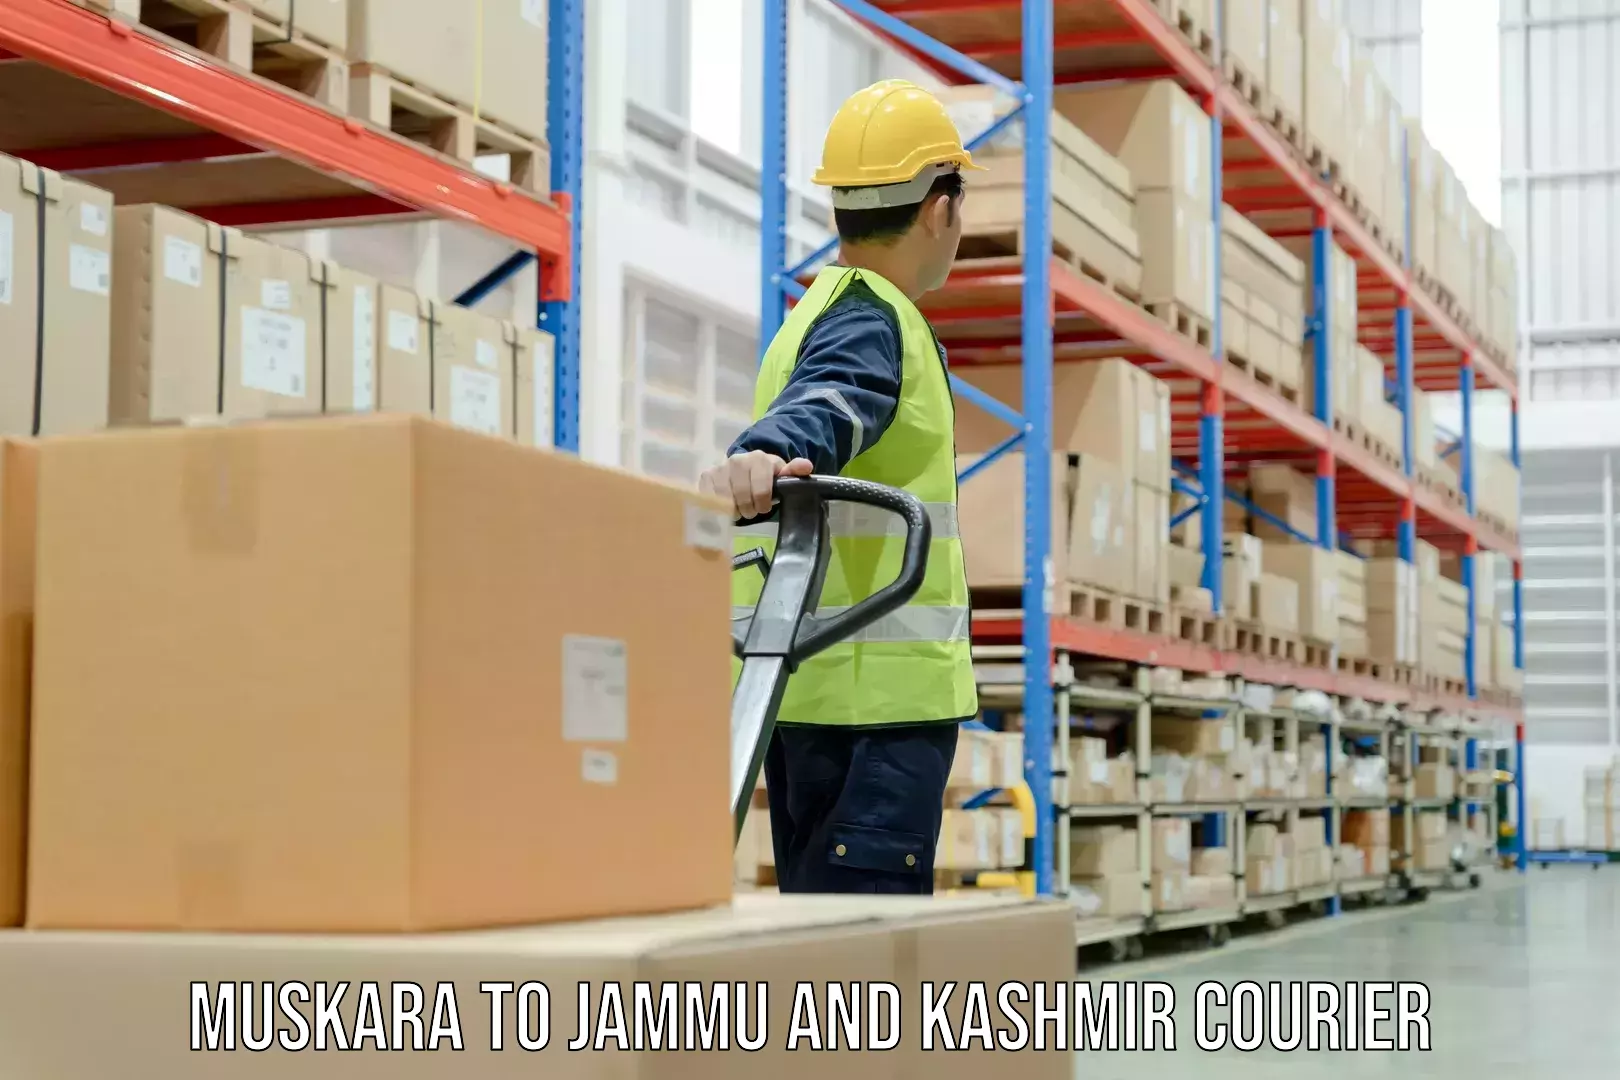 State-of-the-art courier technology Muskara to Jammu and Kashmir